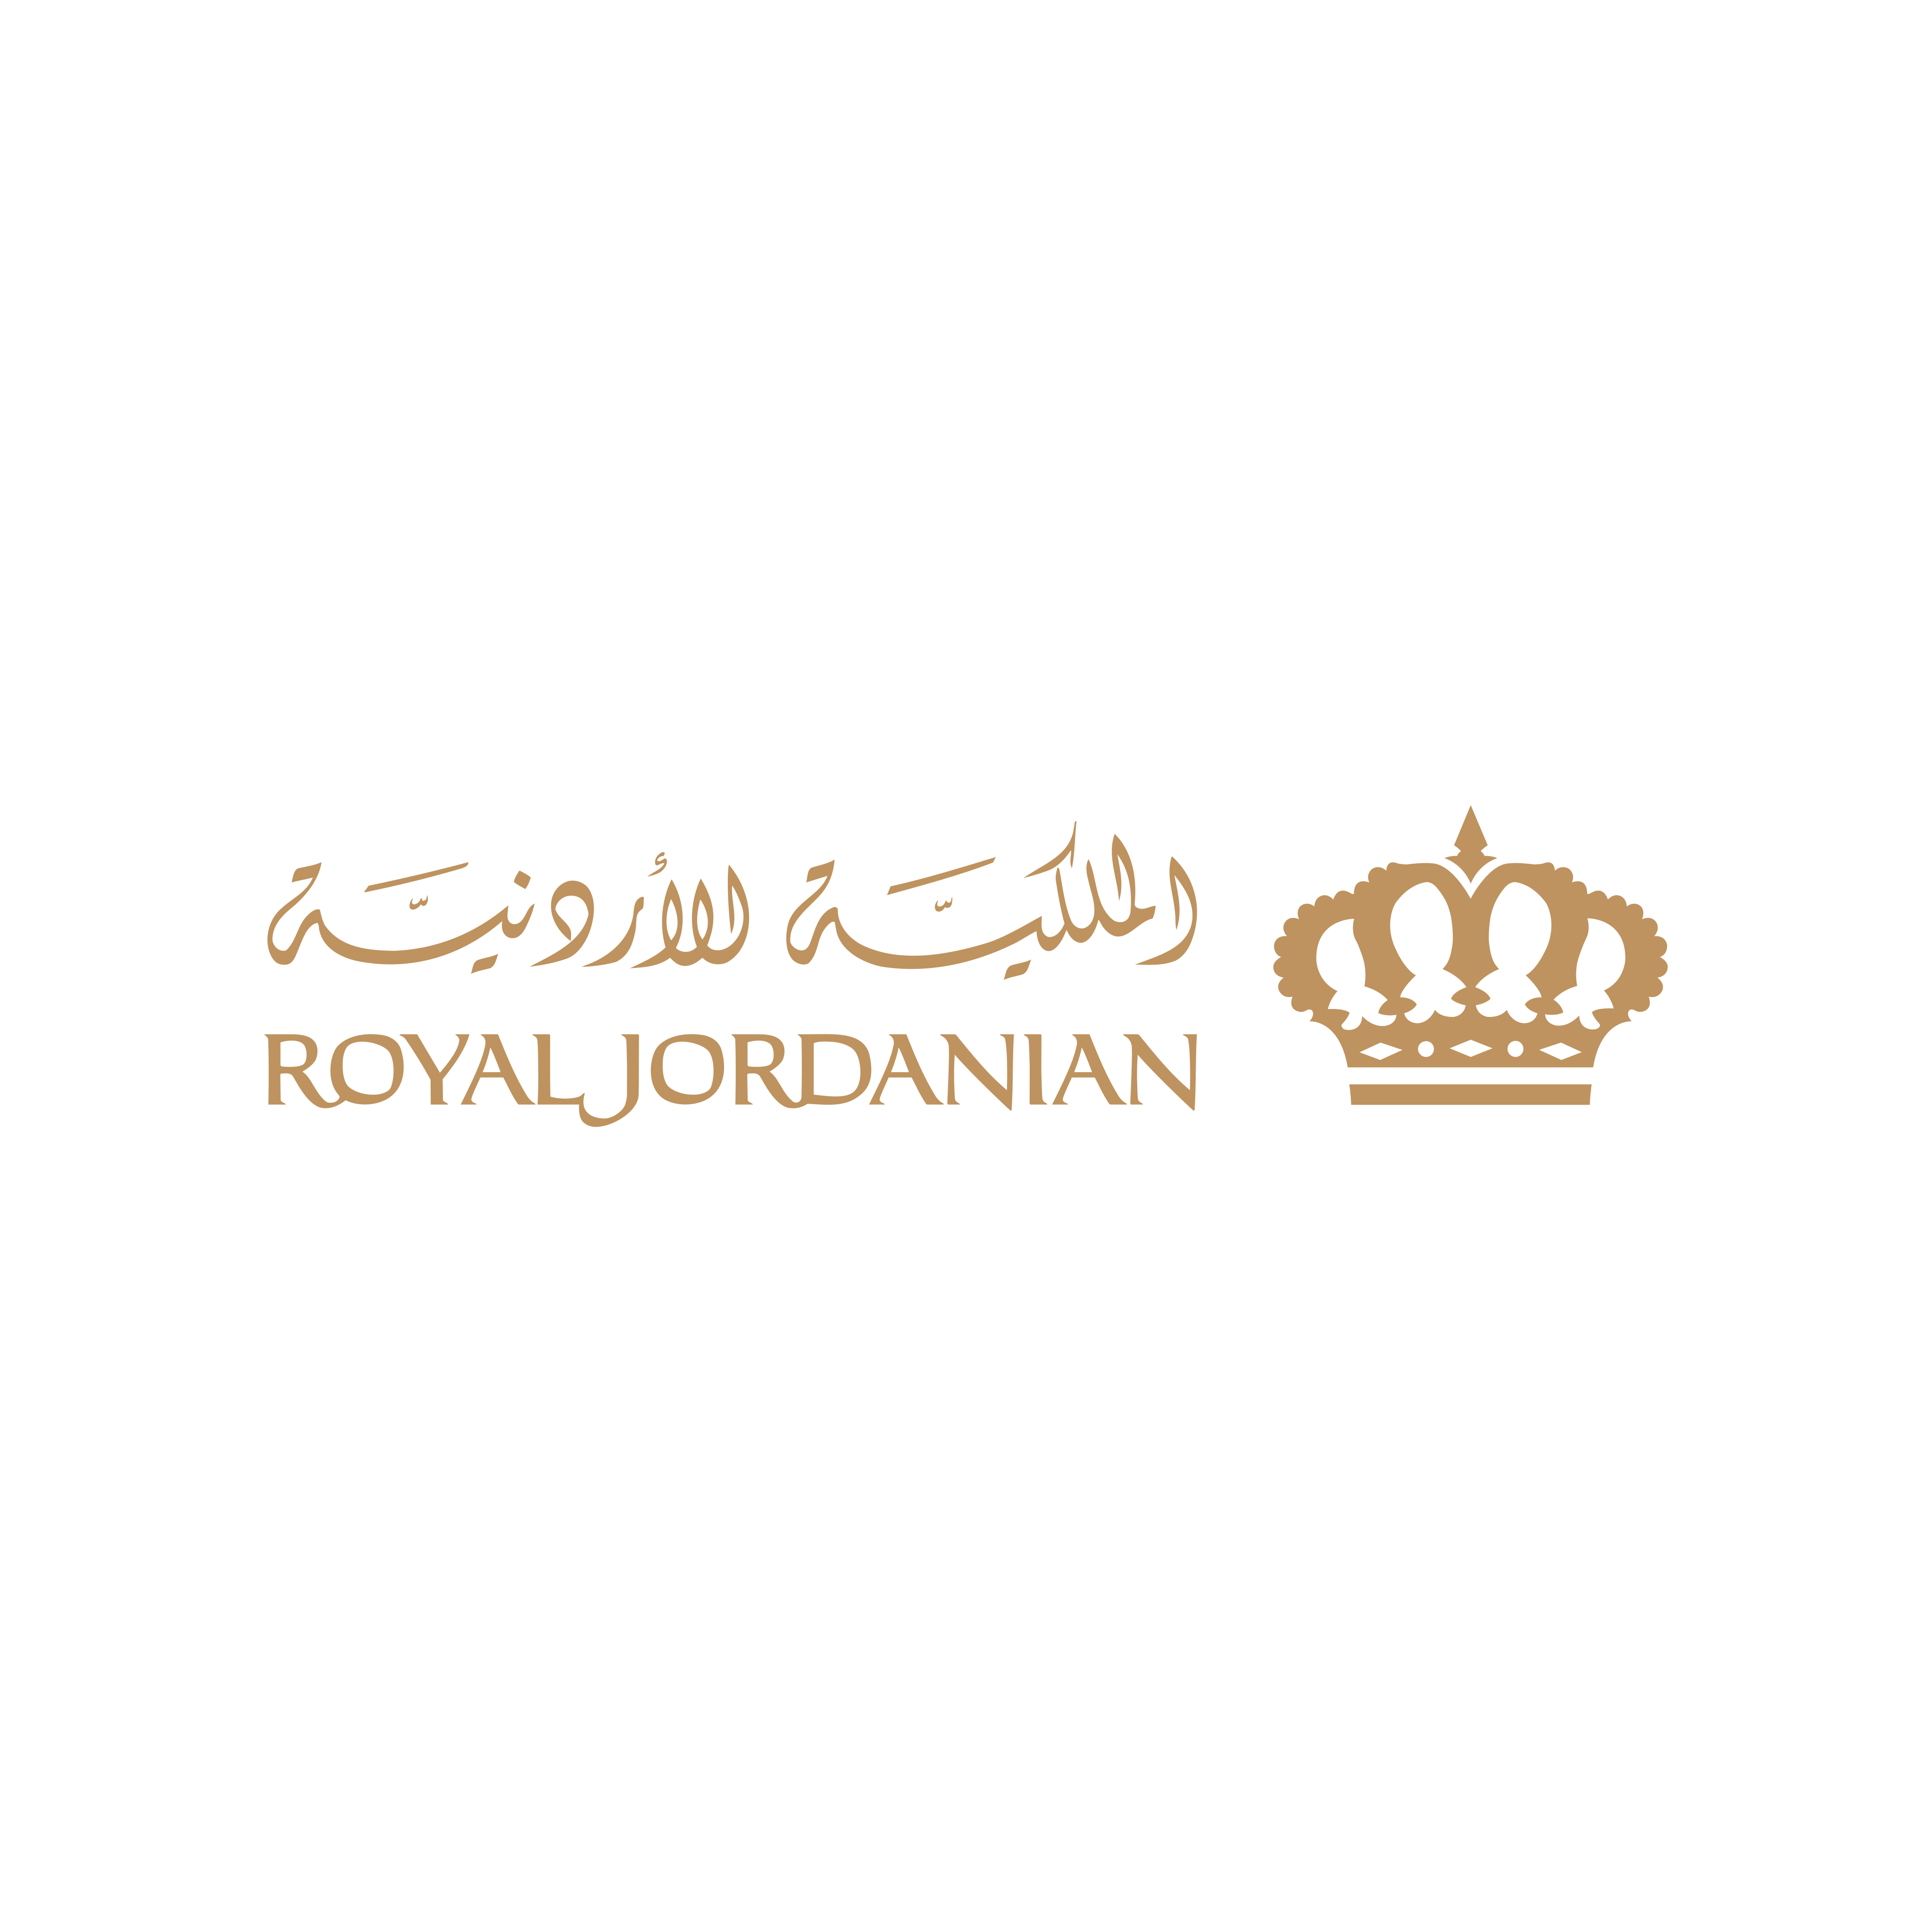 royal jordanian logo 0 - Royal Jordanian Airlines Logo